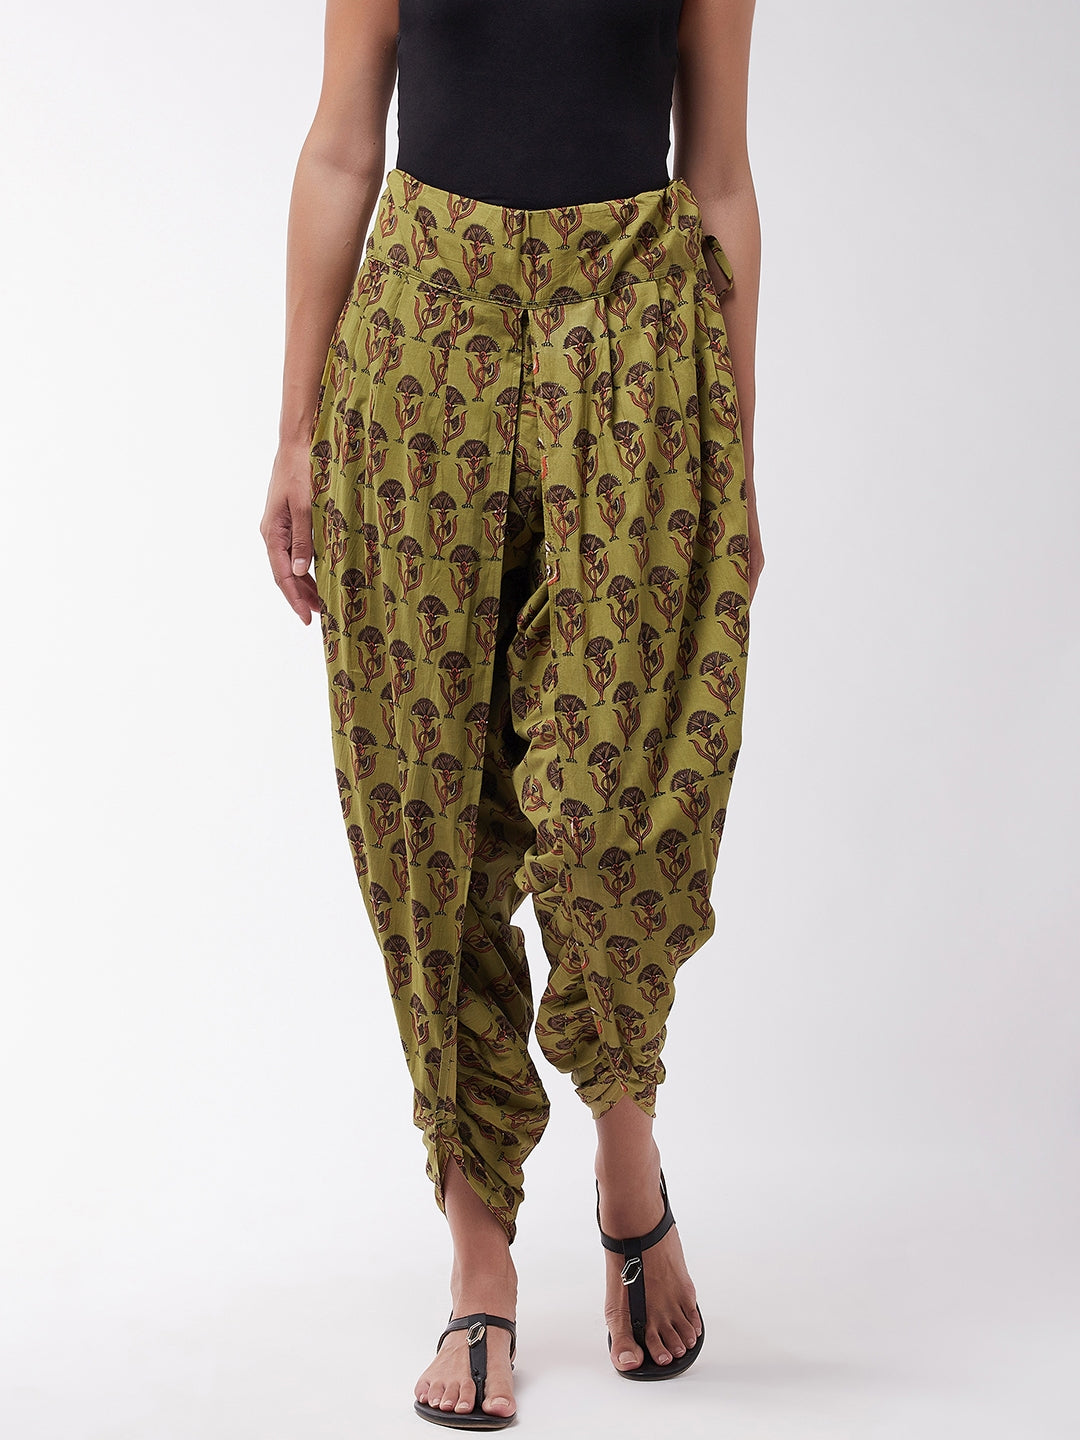 Designer Crop Top With Dhoti Pants Set For Women, Dhoti Suit Set, Indo  Western | eBay